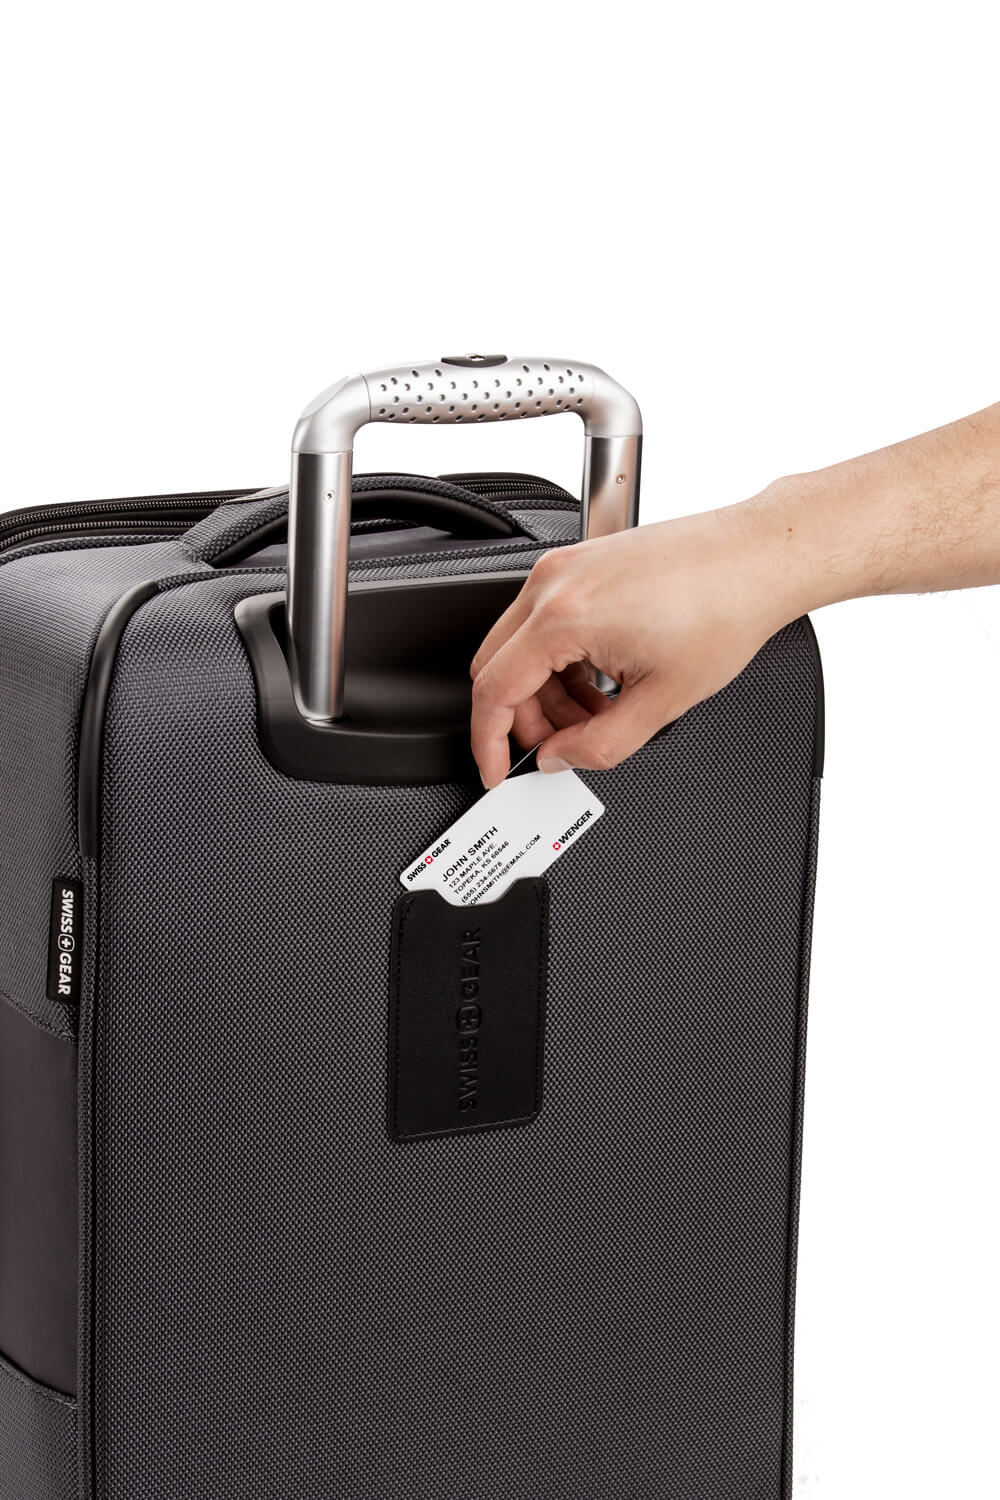 Bags & Purses Luggage & Travel Luggage Tags Key Tag personalized Luggage Tag luggage tag personalized custom luggage tag bag tag personalized tag 